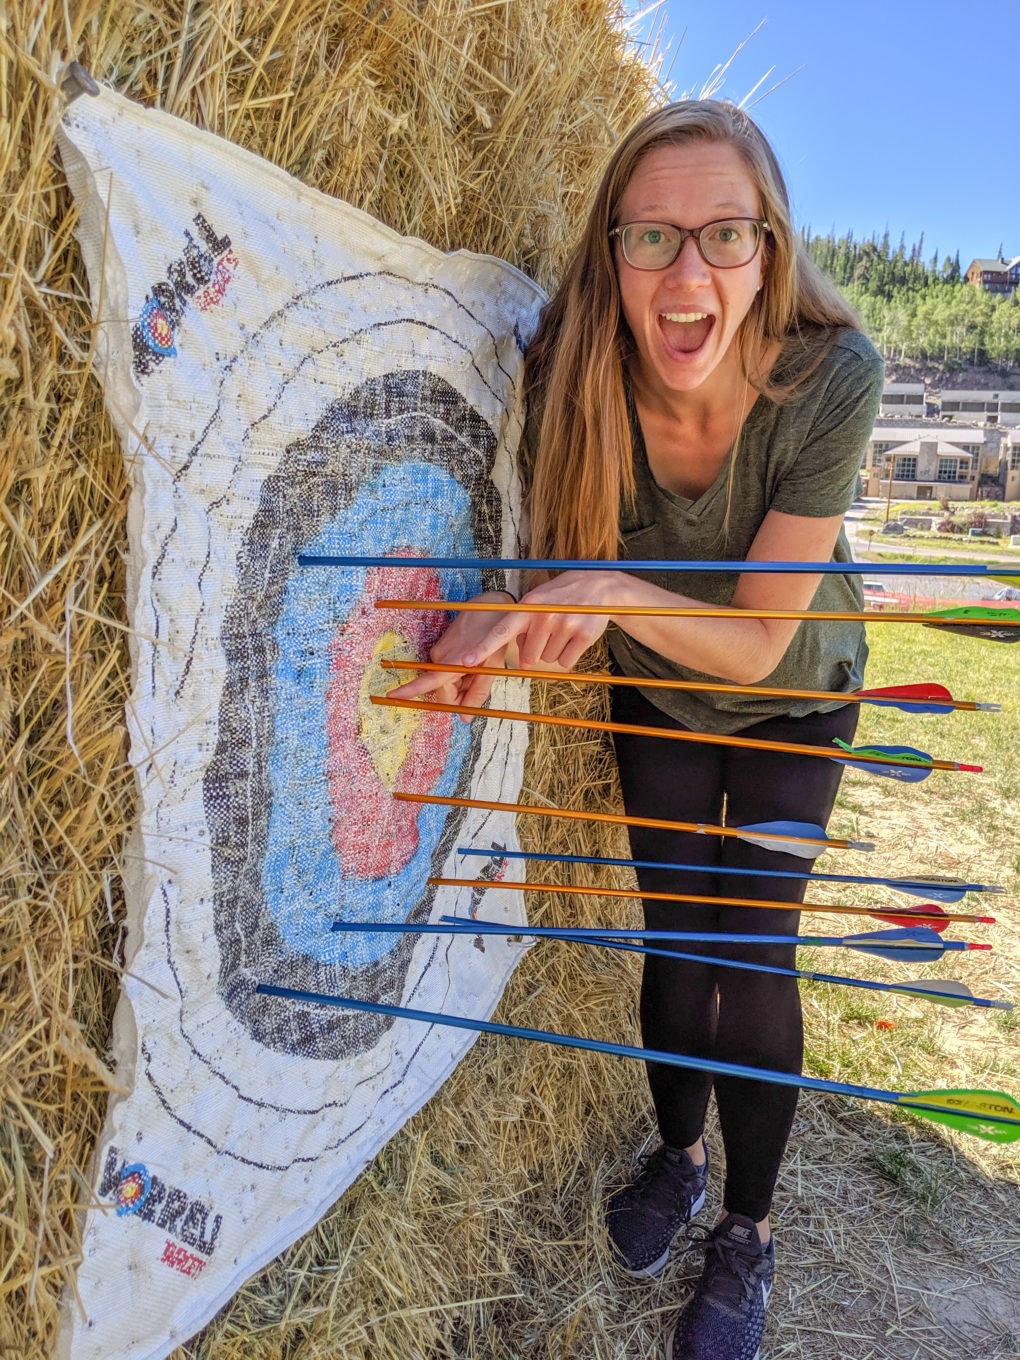 Archery. Activities for a DIY women's wellness retreat on a budget.